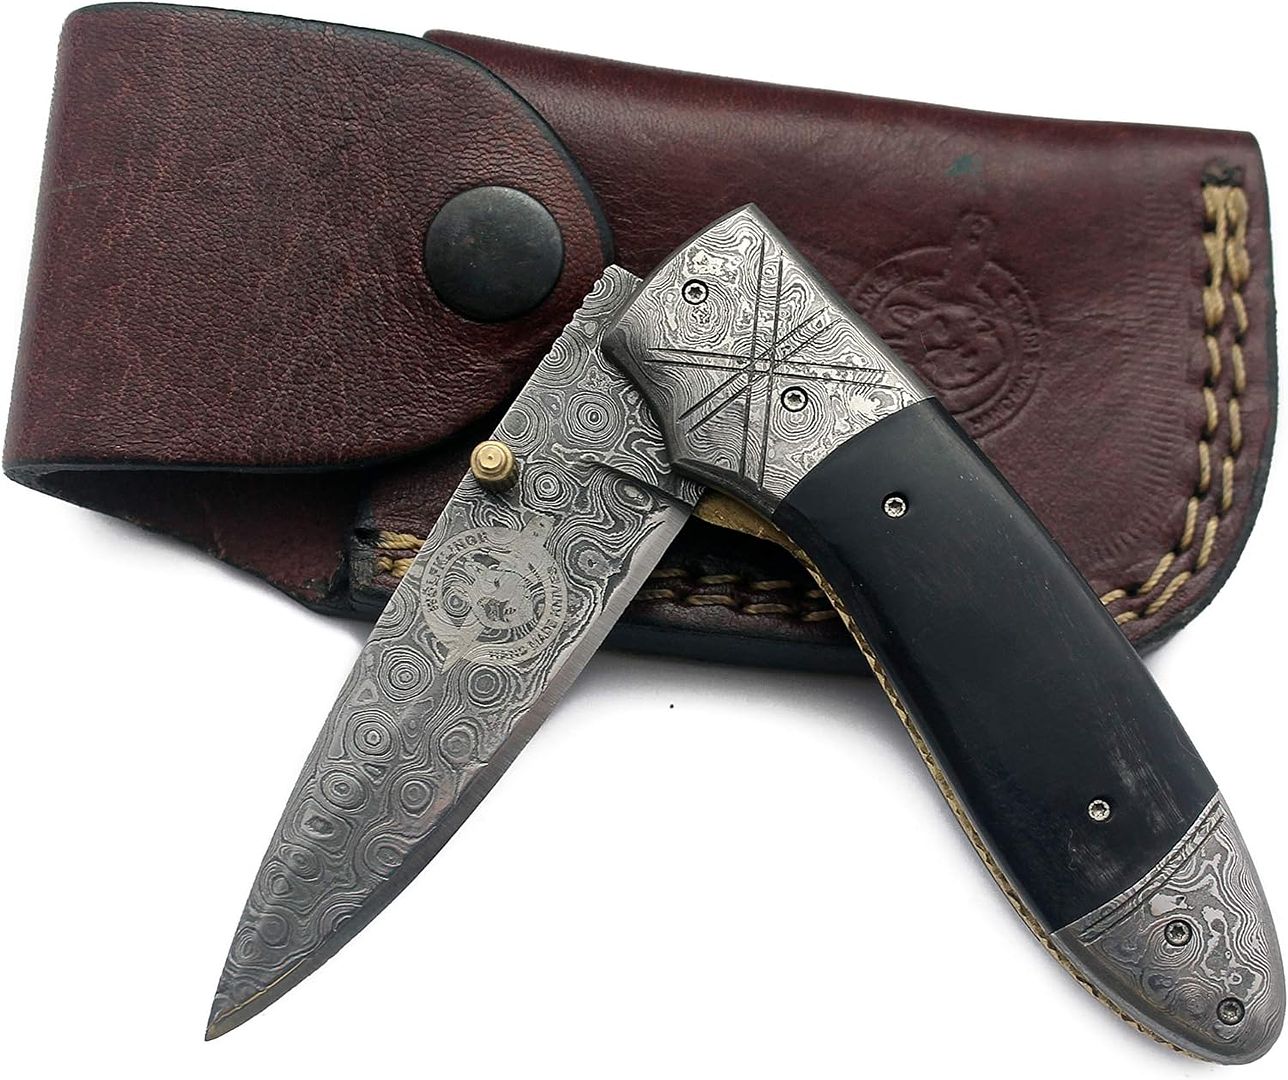 WolfKlinge Handmade Damascus Steel Pocket Knife for Hunting, Survival, Camping, Skinning, Bushcraft, Foldable Full Tang Camel Bone Handle